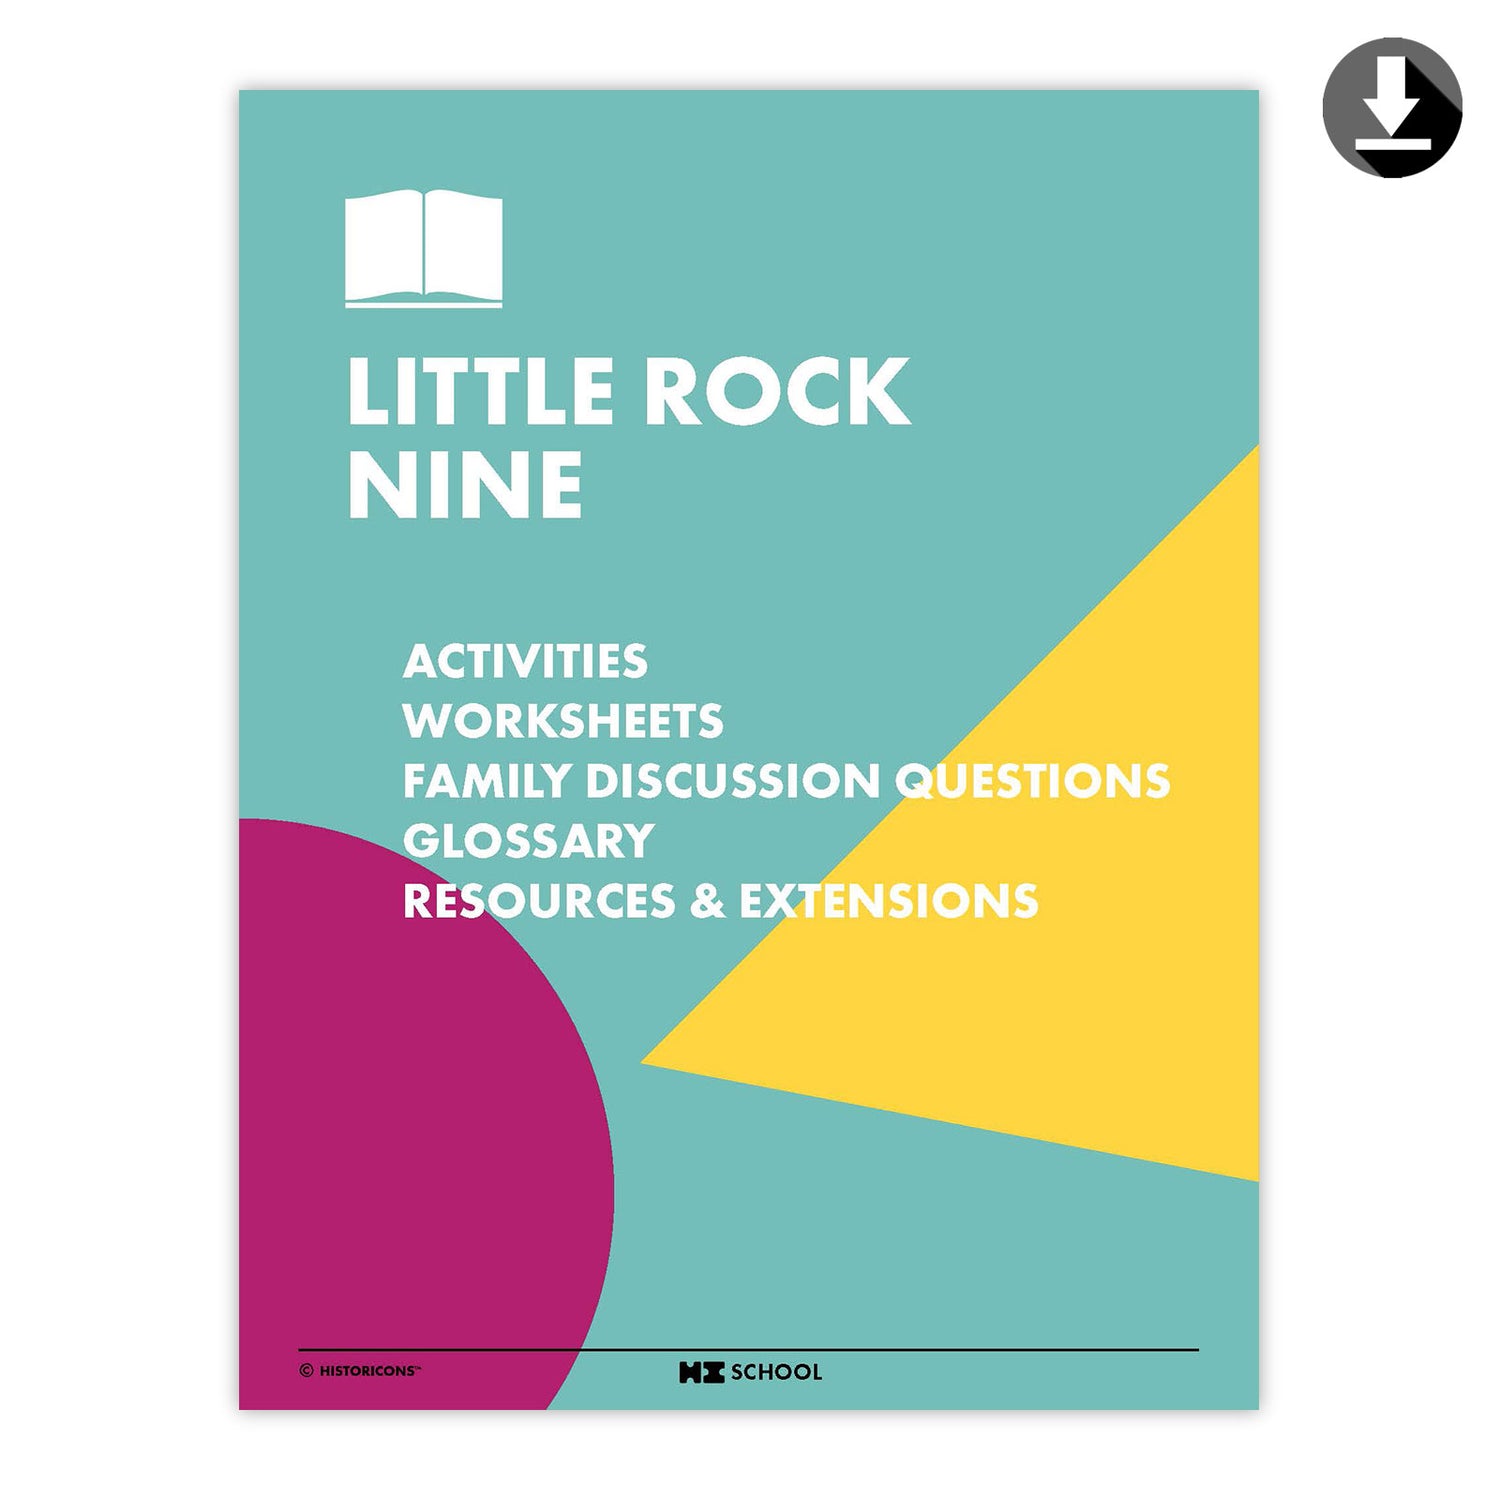 Little Rock Nine: Resources